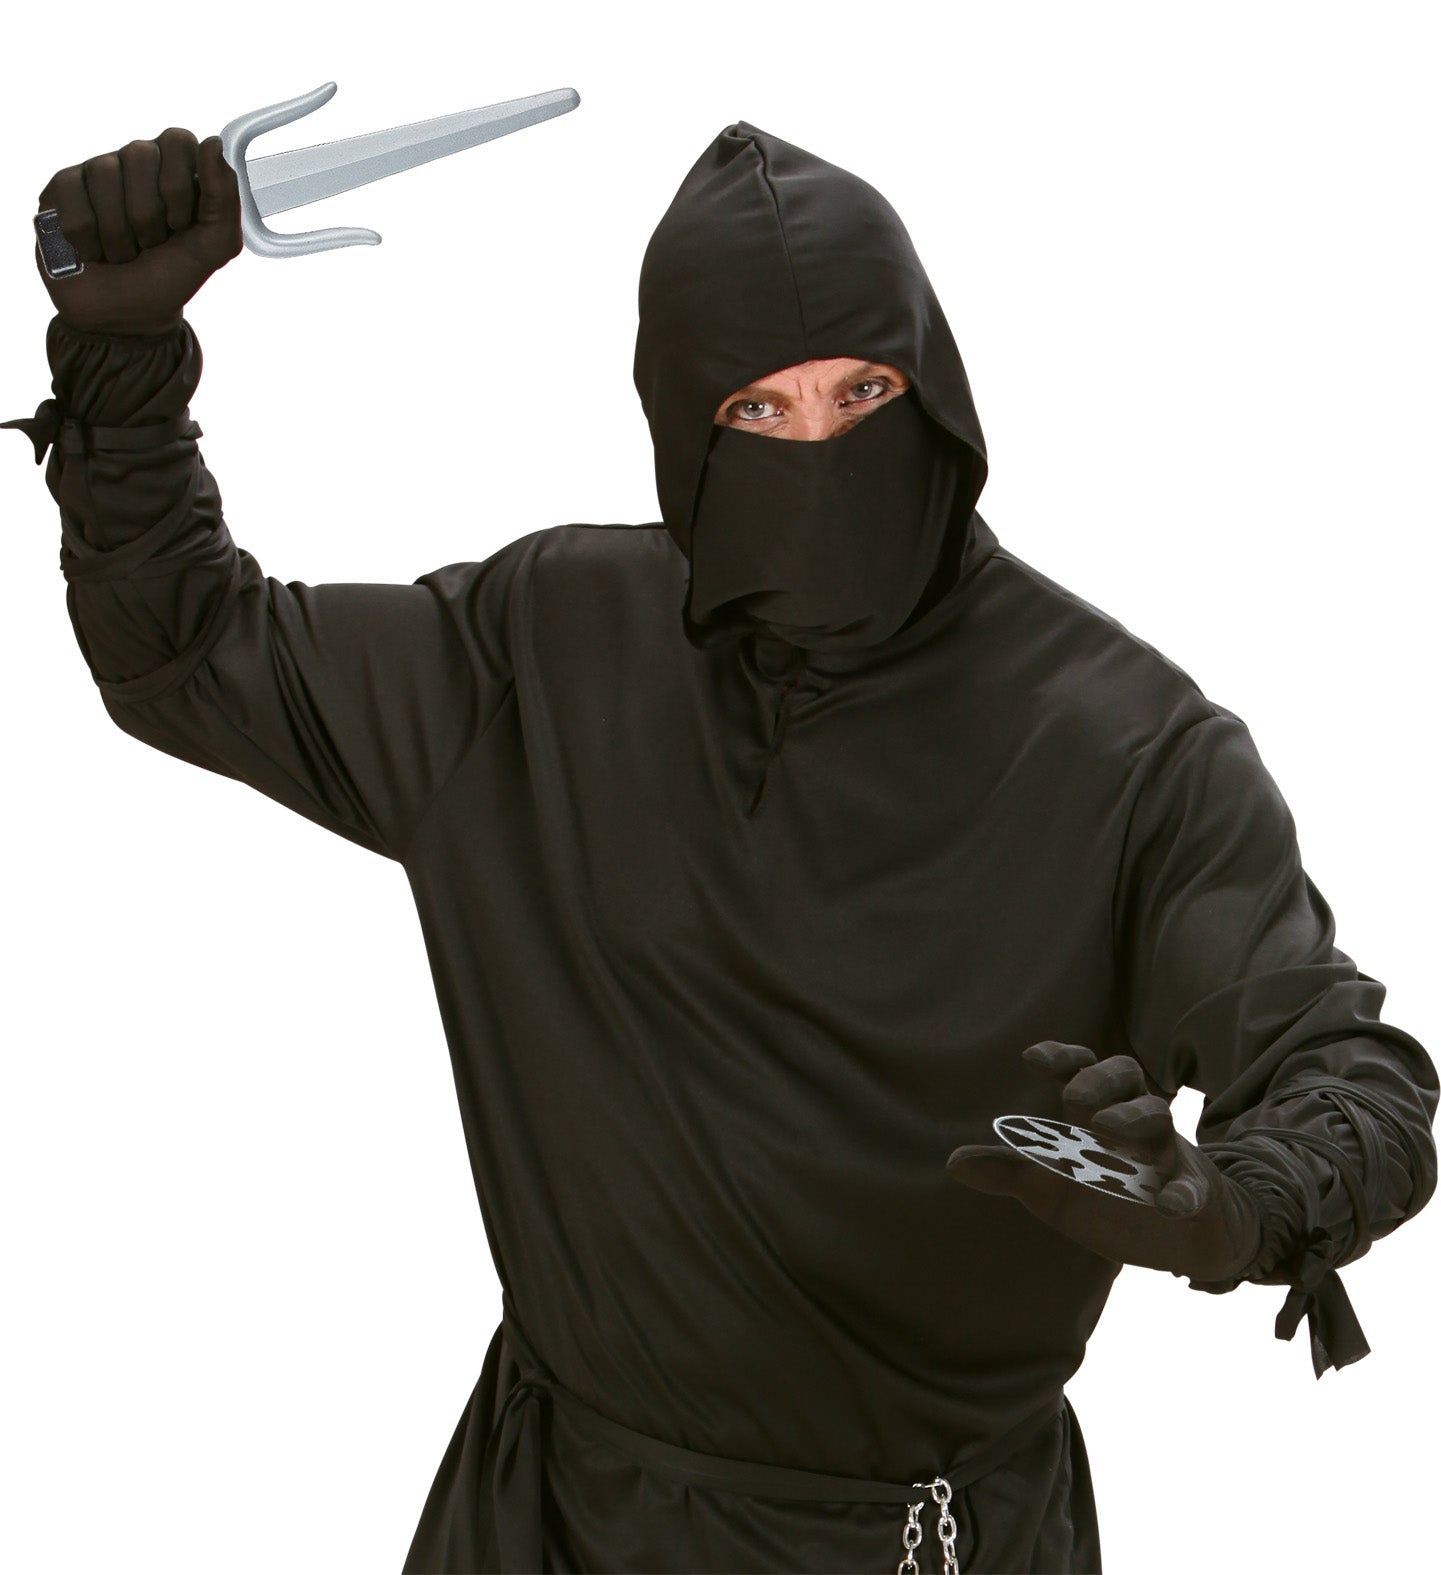 Ninja Sai and Shuriken Weapon Set costume accessory